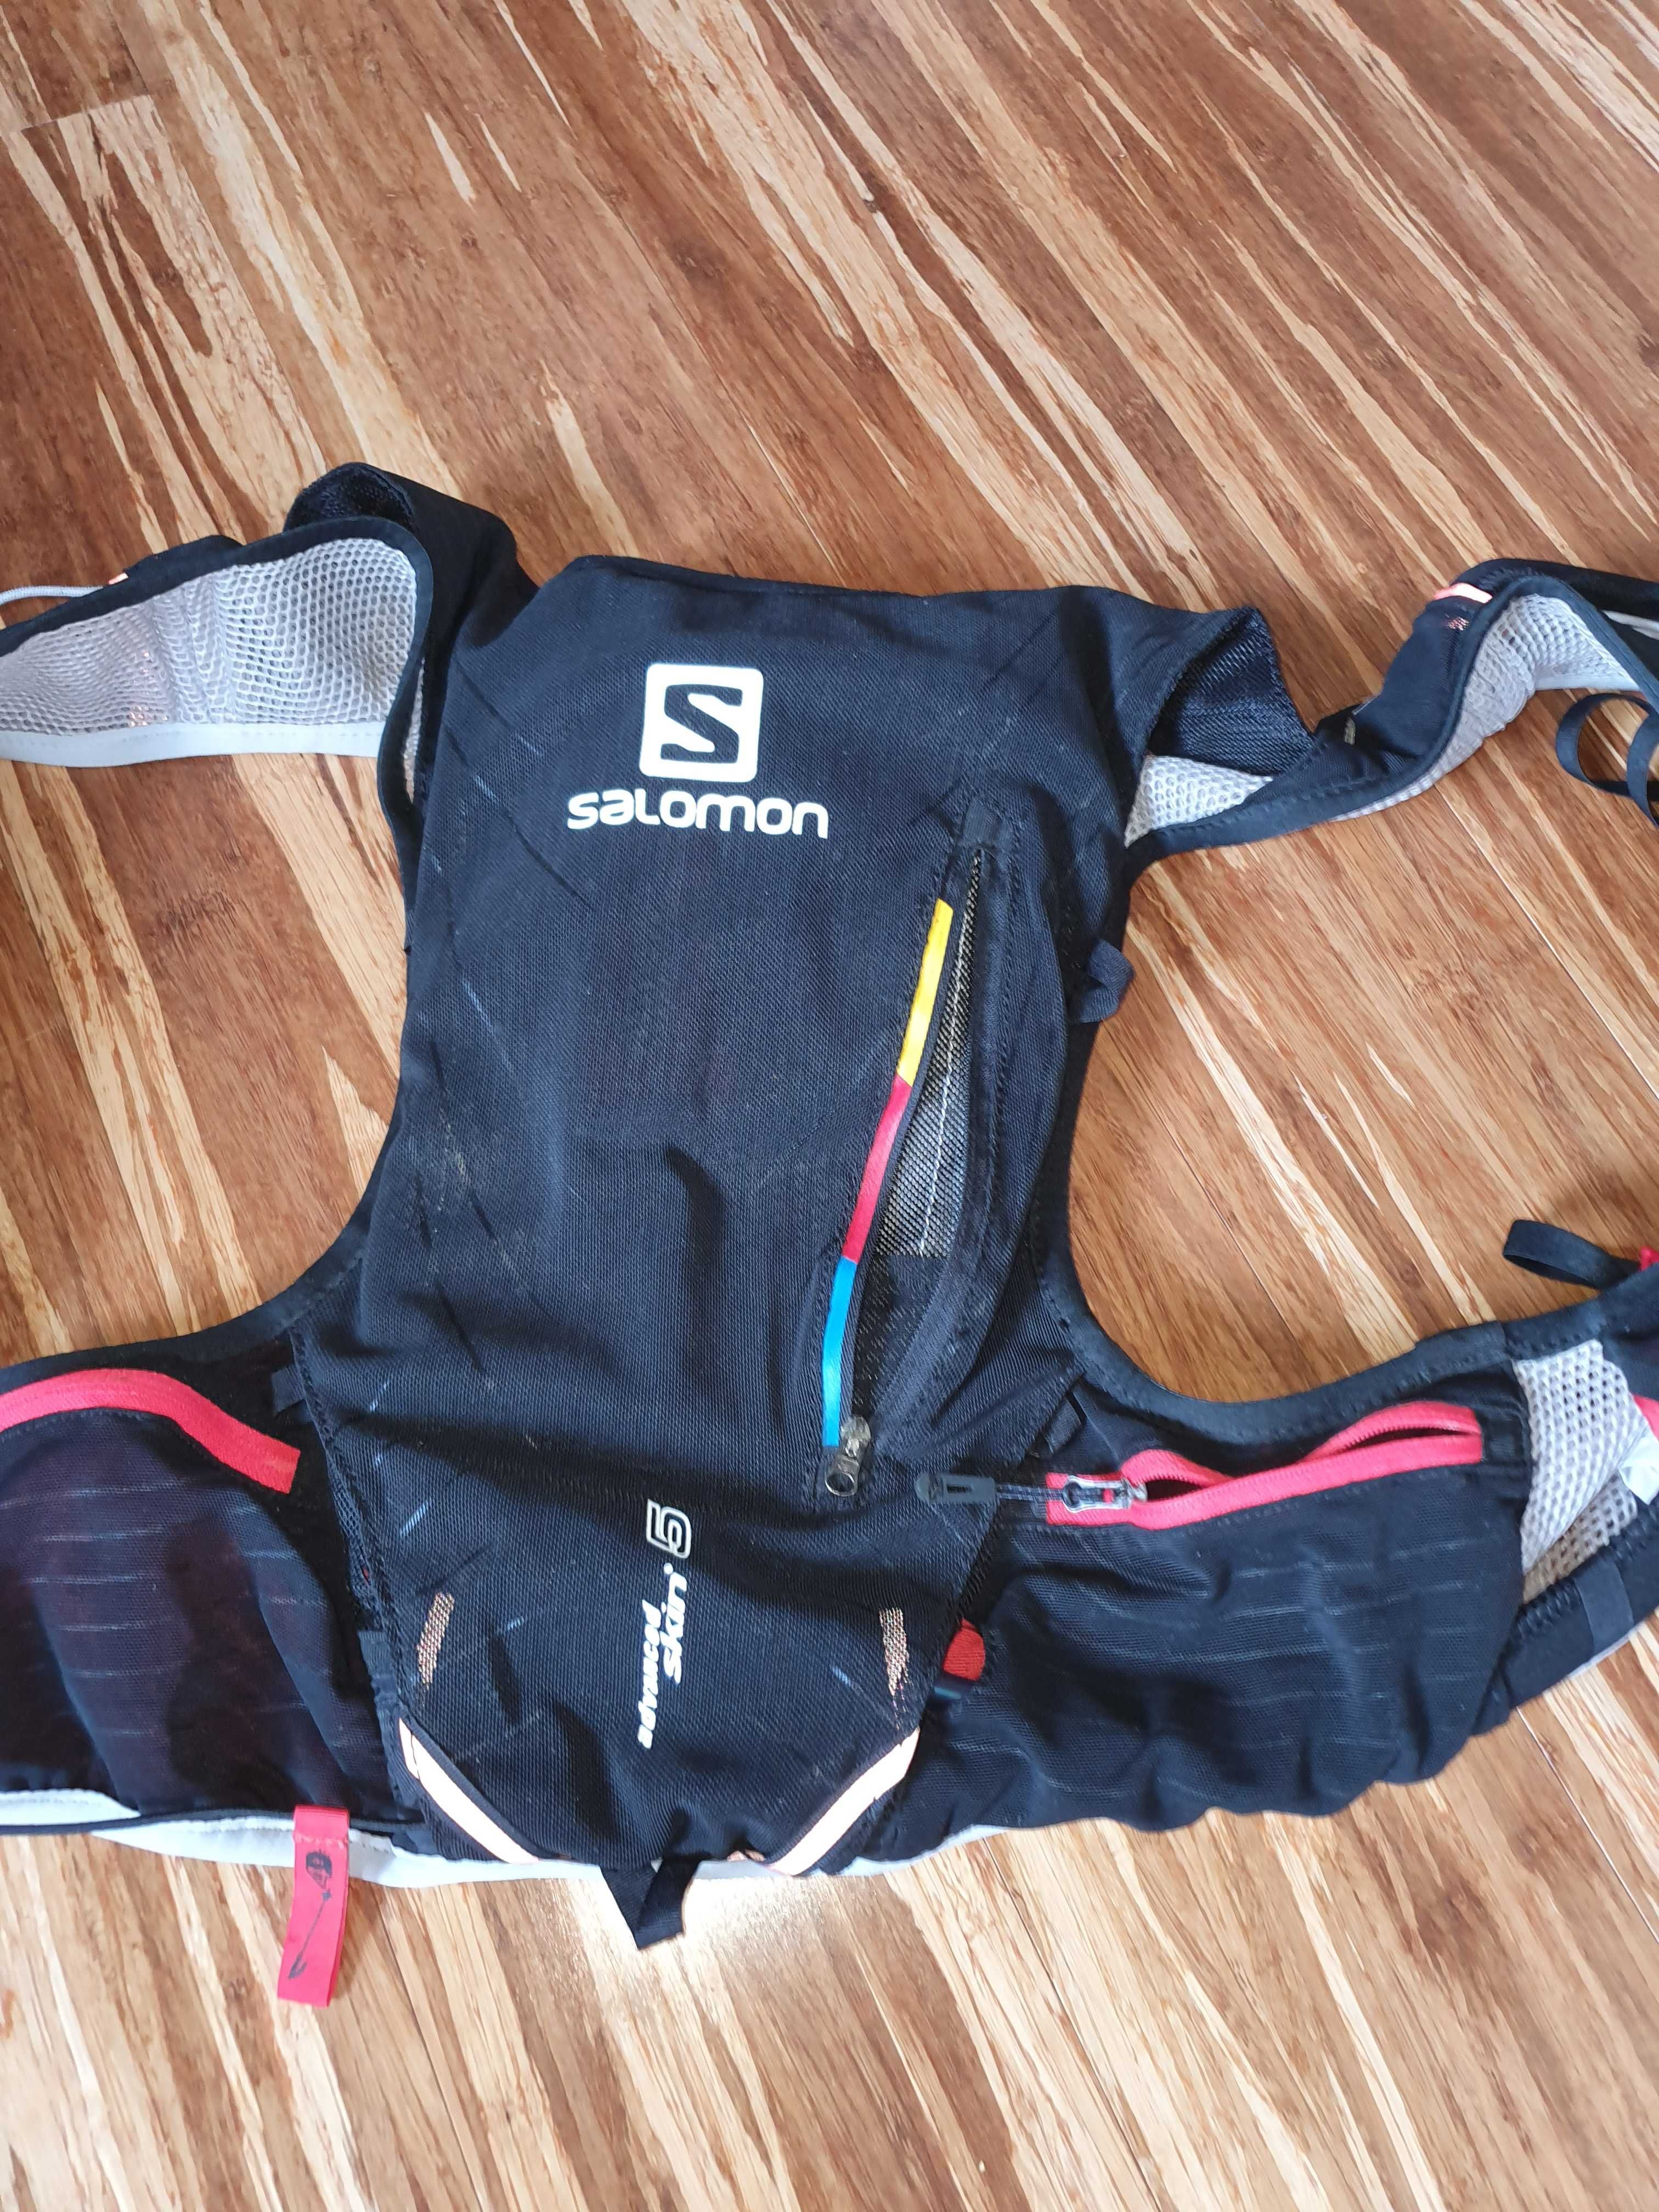 Salomon advanced skin 5 vest